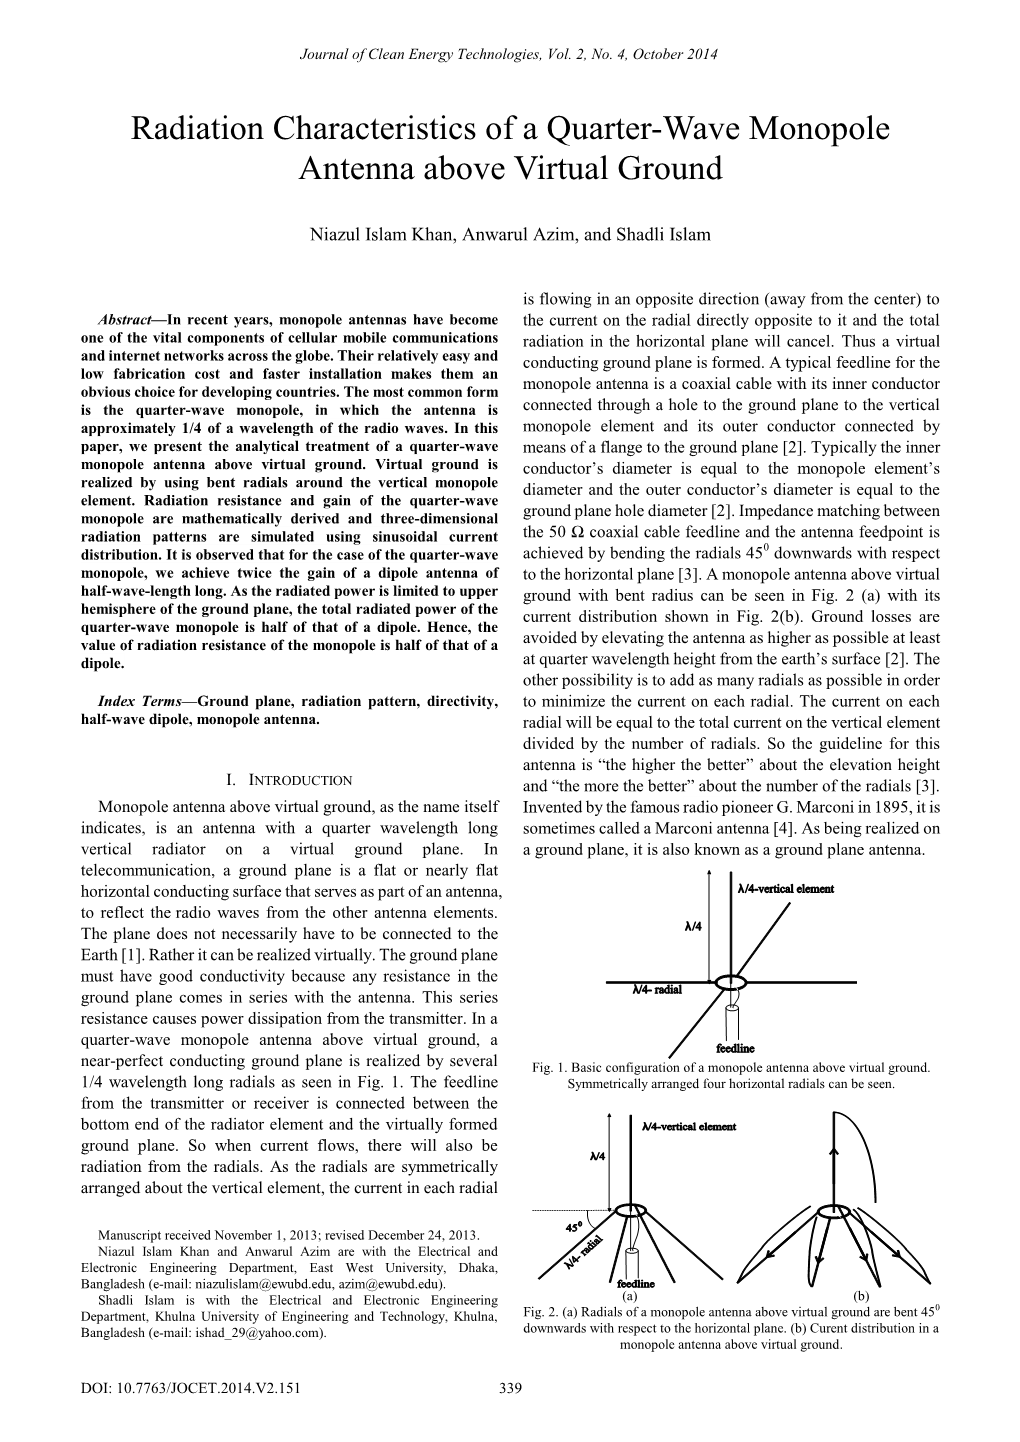 Radiation Characteristics of a Quarter-Wave Monopole Antenna Above Virtual Ground